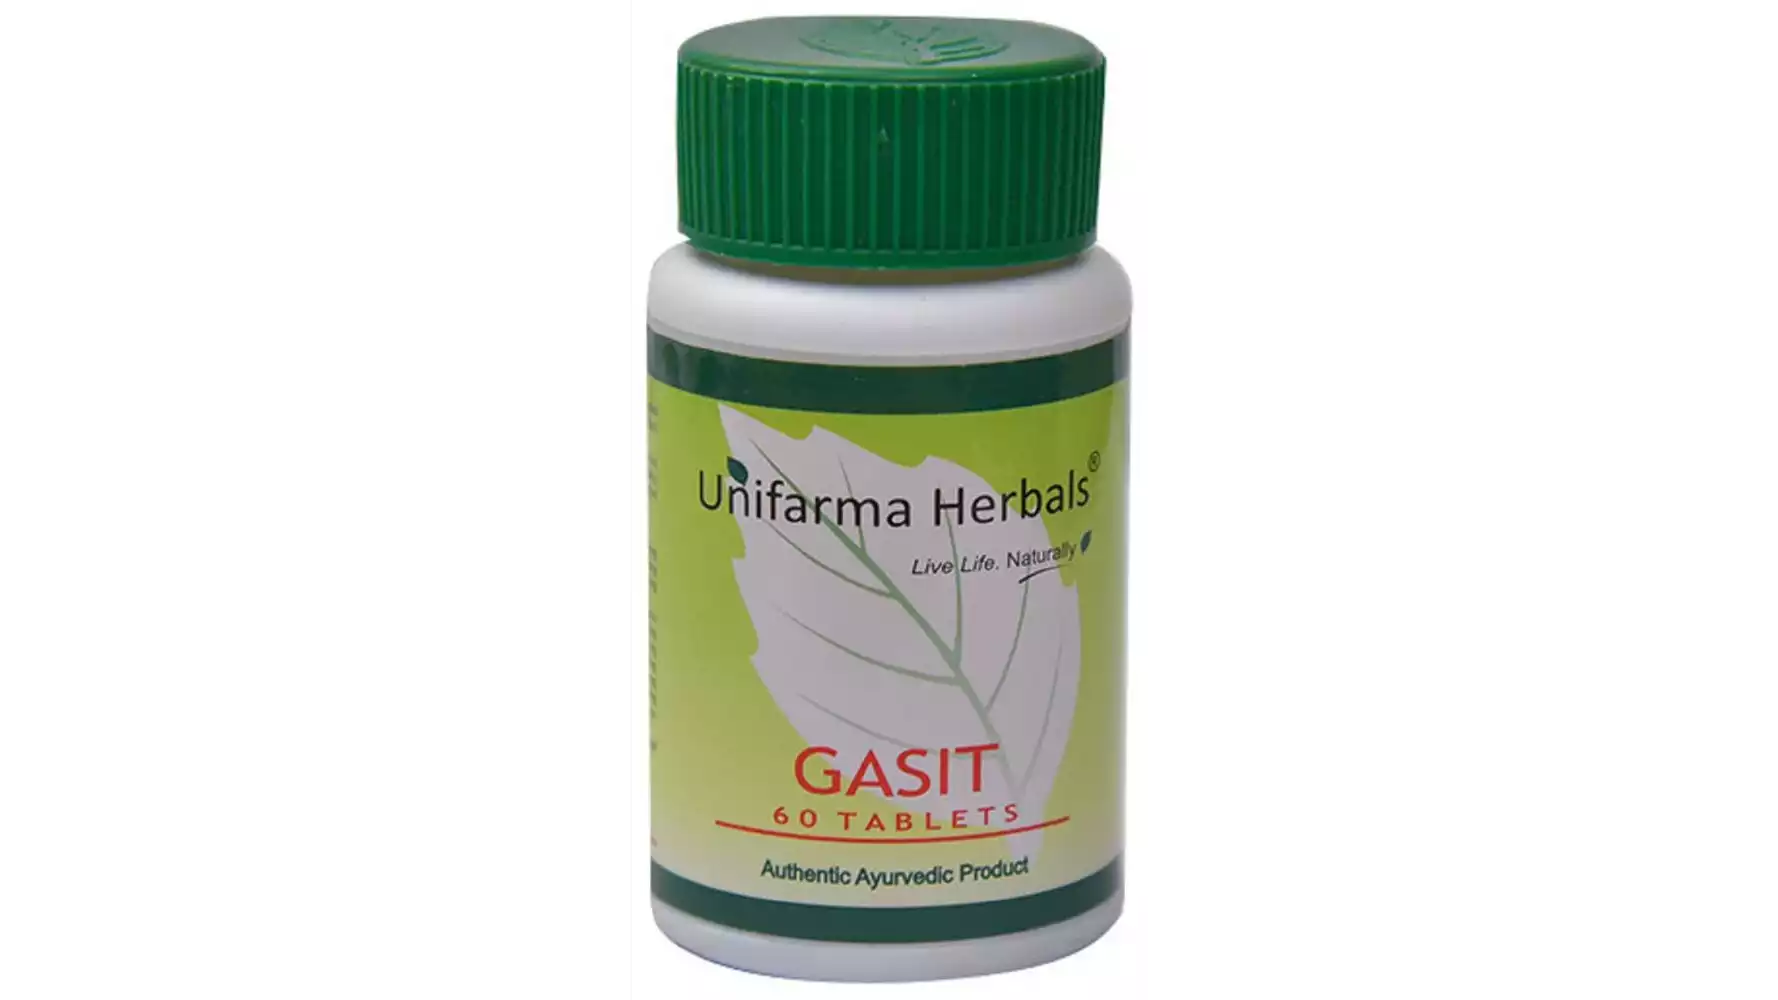 Unifarma Herbals Gasit (60tab)